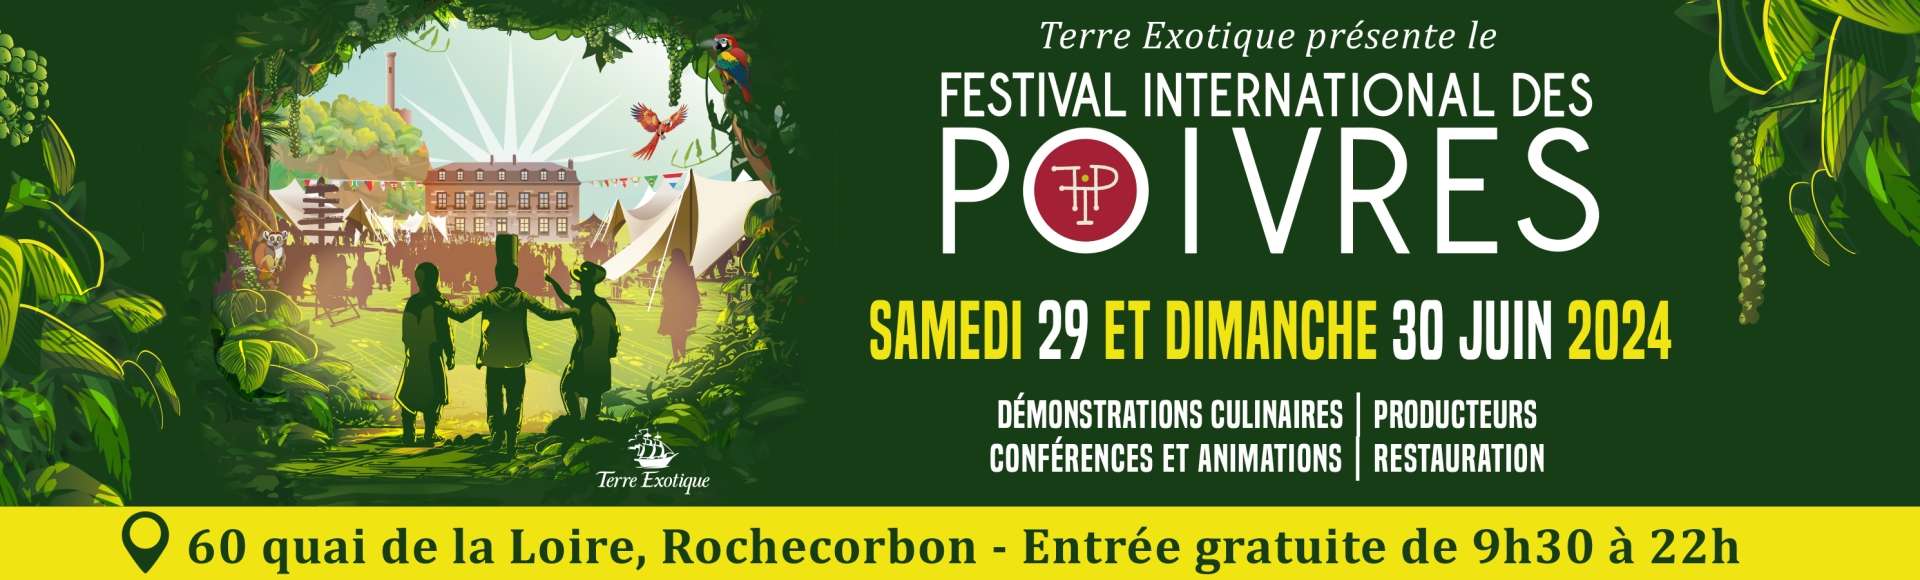 Festival International des Poivres